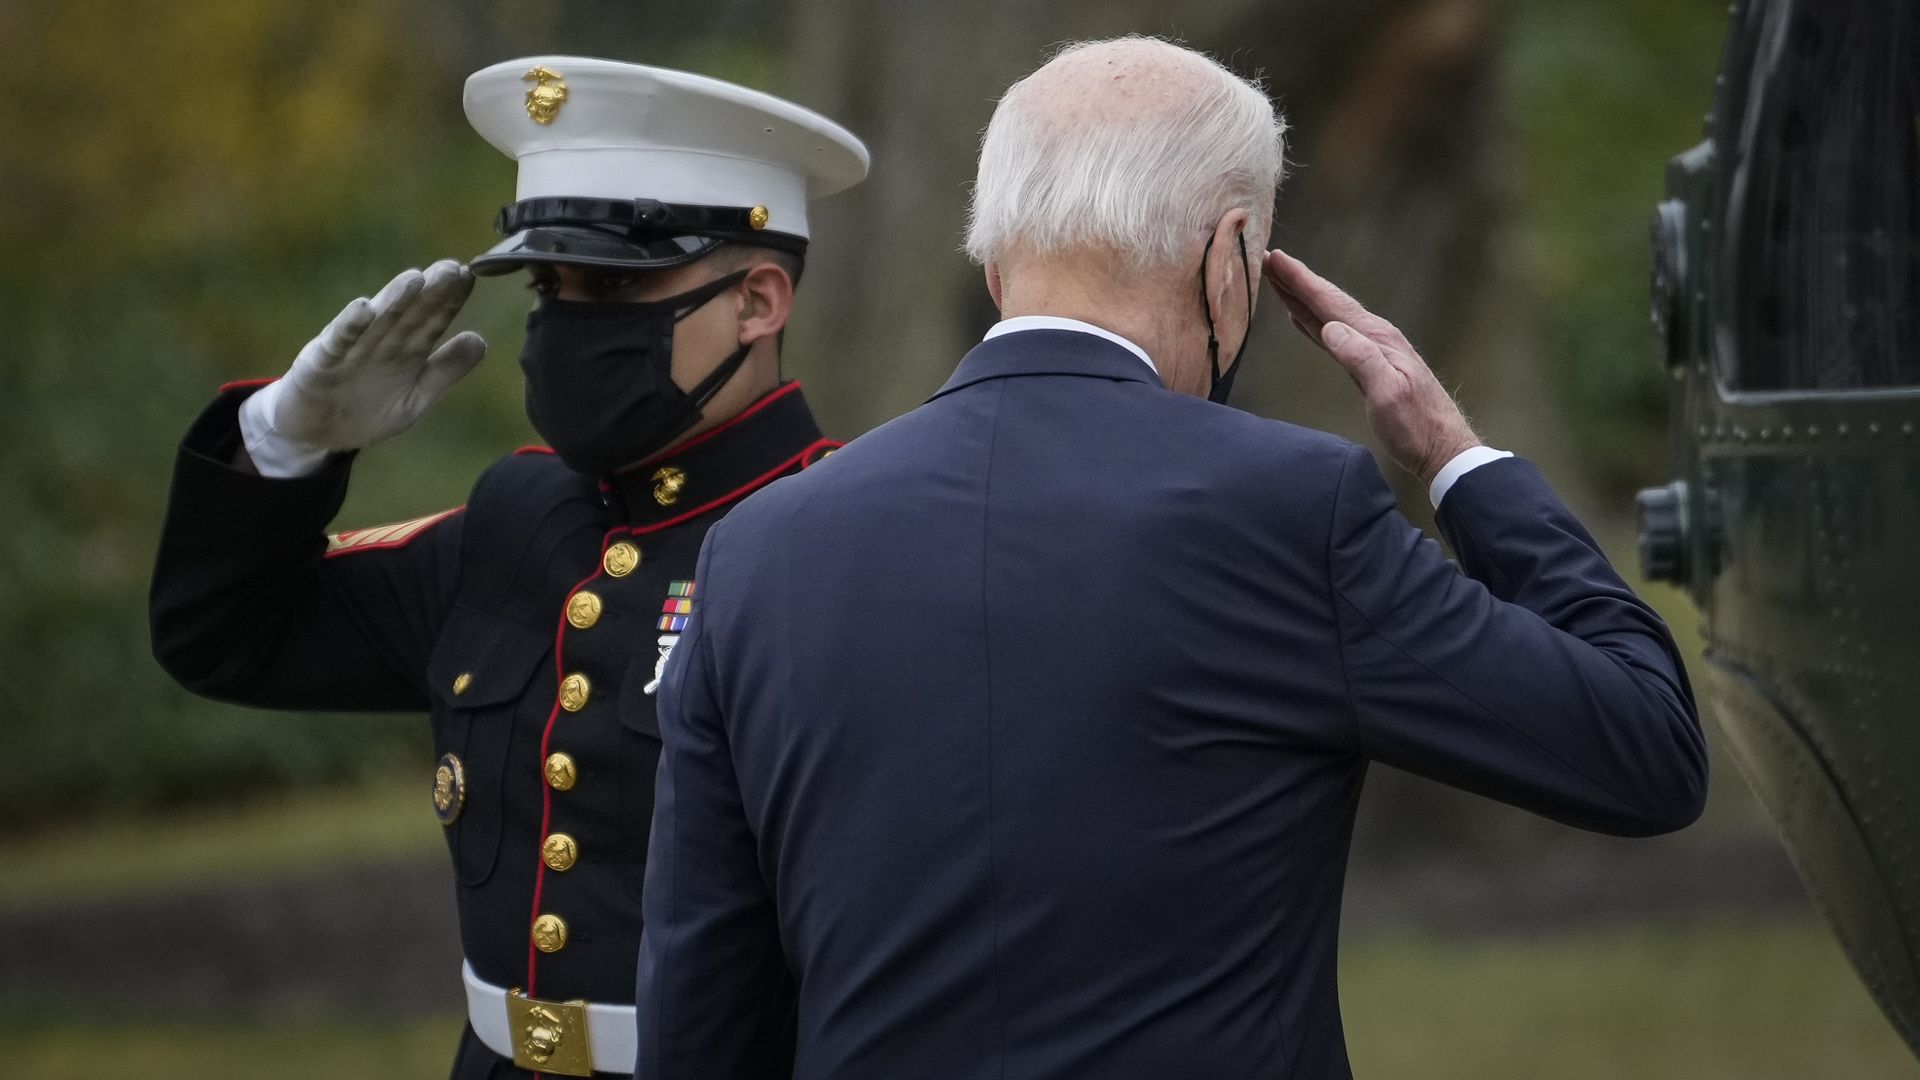 President Biden is seen saluting a Marine as he boards Marine One.